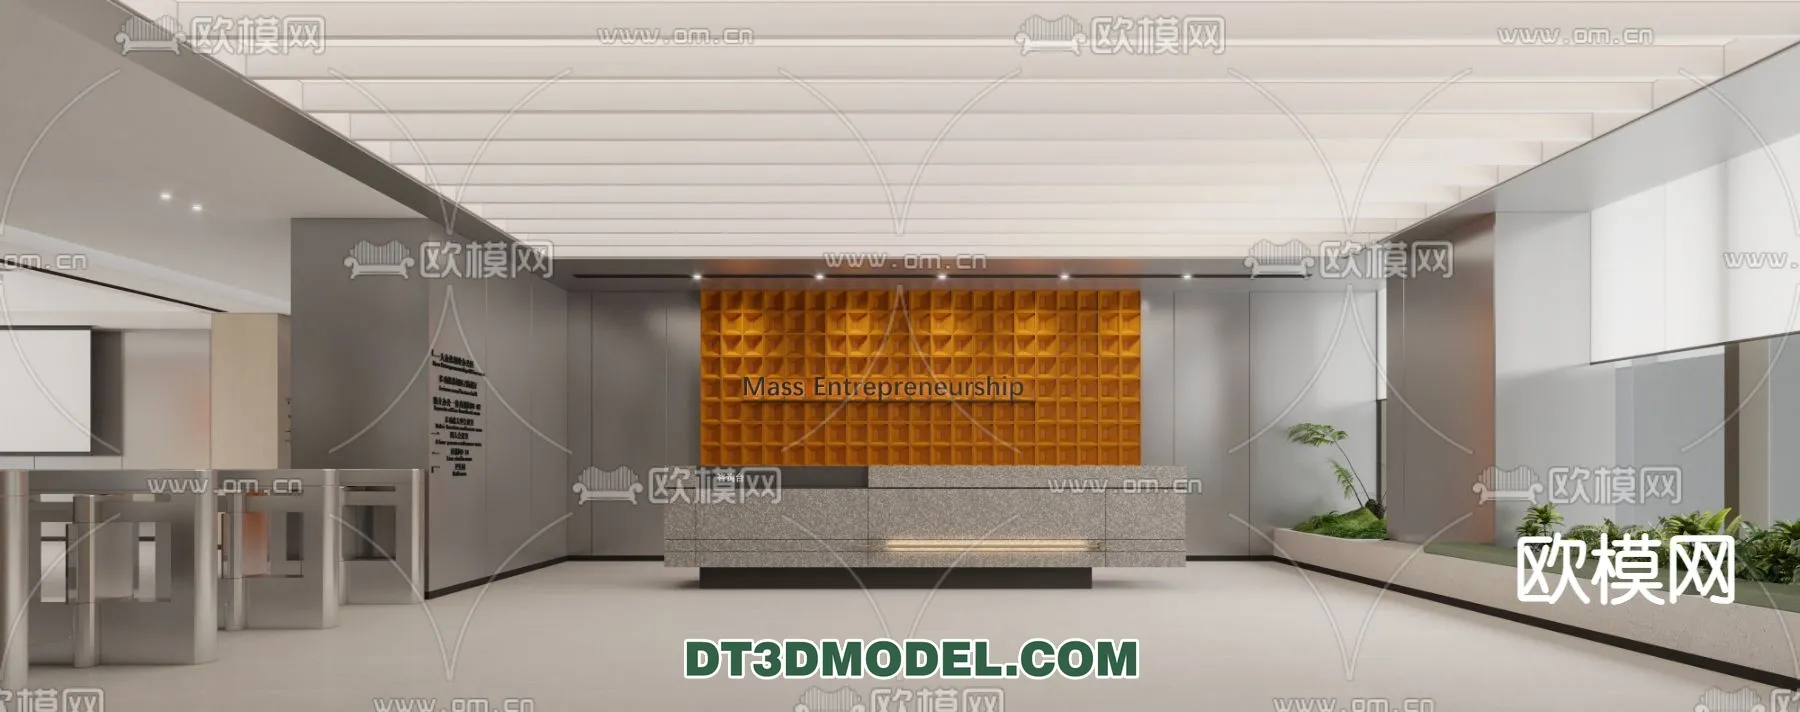 RECEPTION 3D MODEL – MODERN STYLE – 070